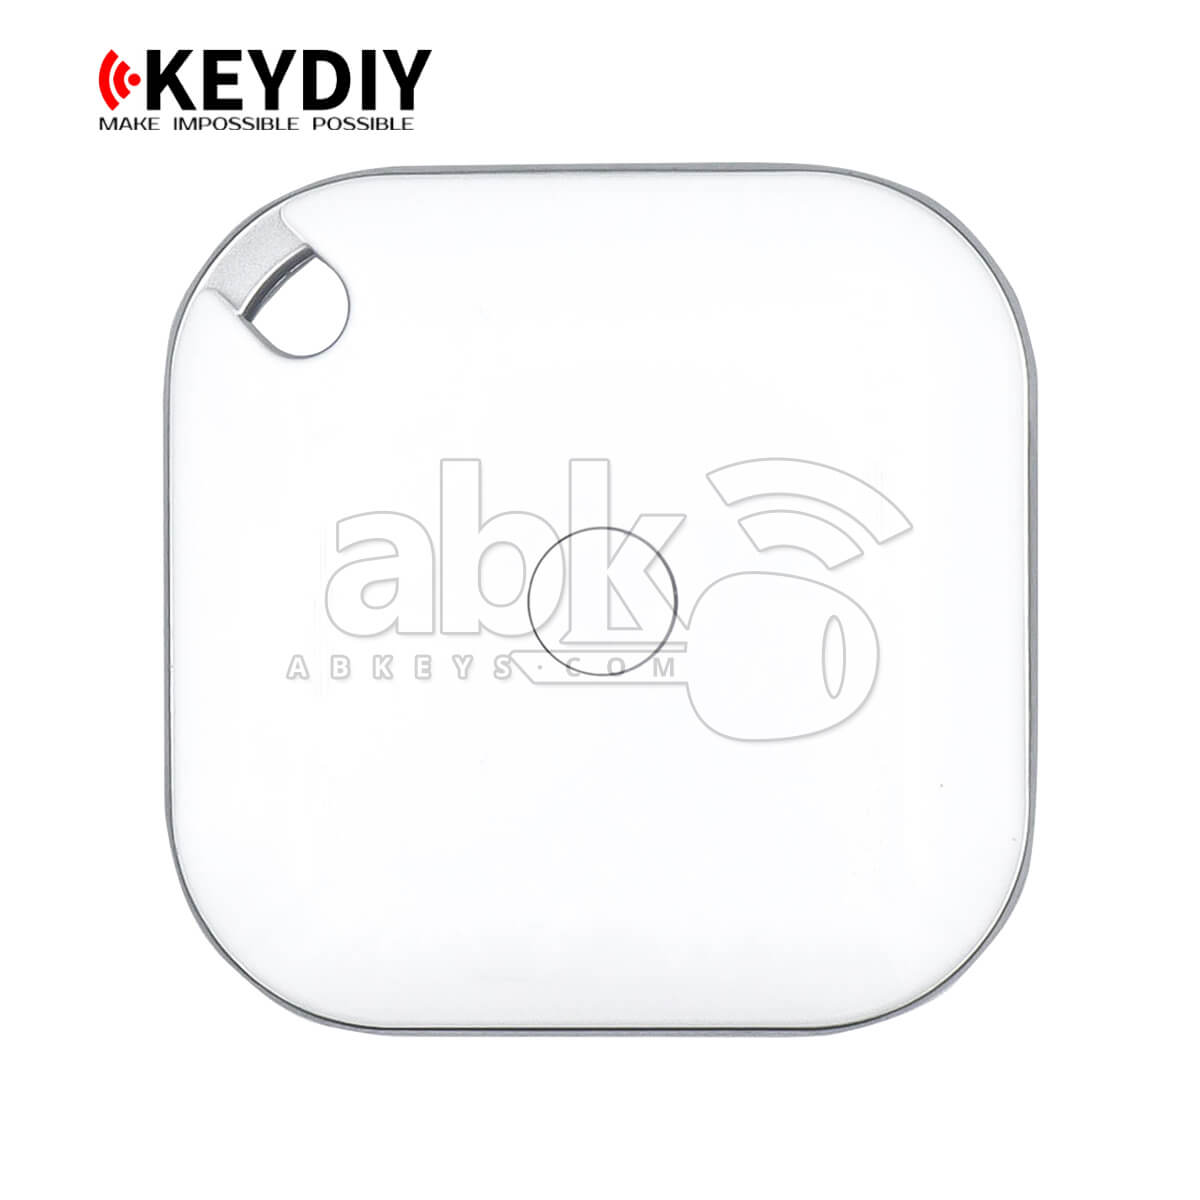 KeyDiy KD Tag Tracking Device 4Pcs / Pack KD Tag - ABK-3700 - ABKEYS.COM